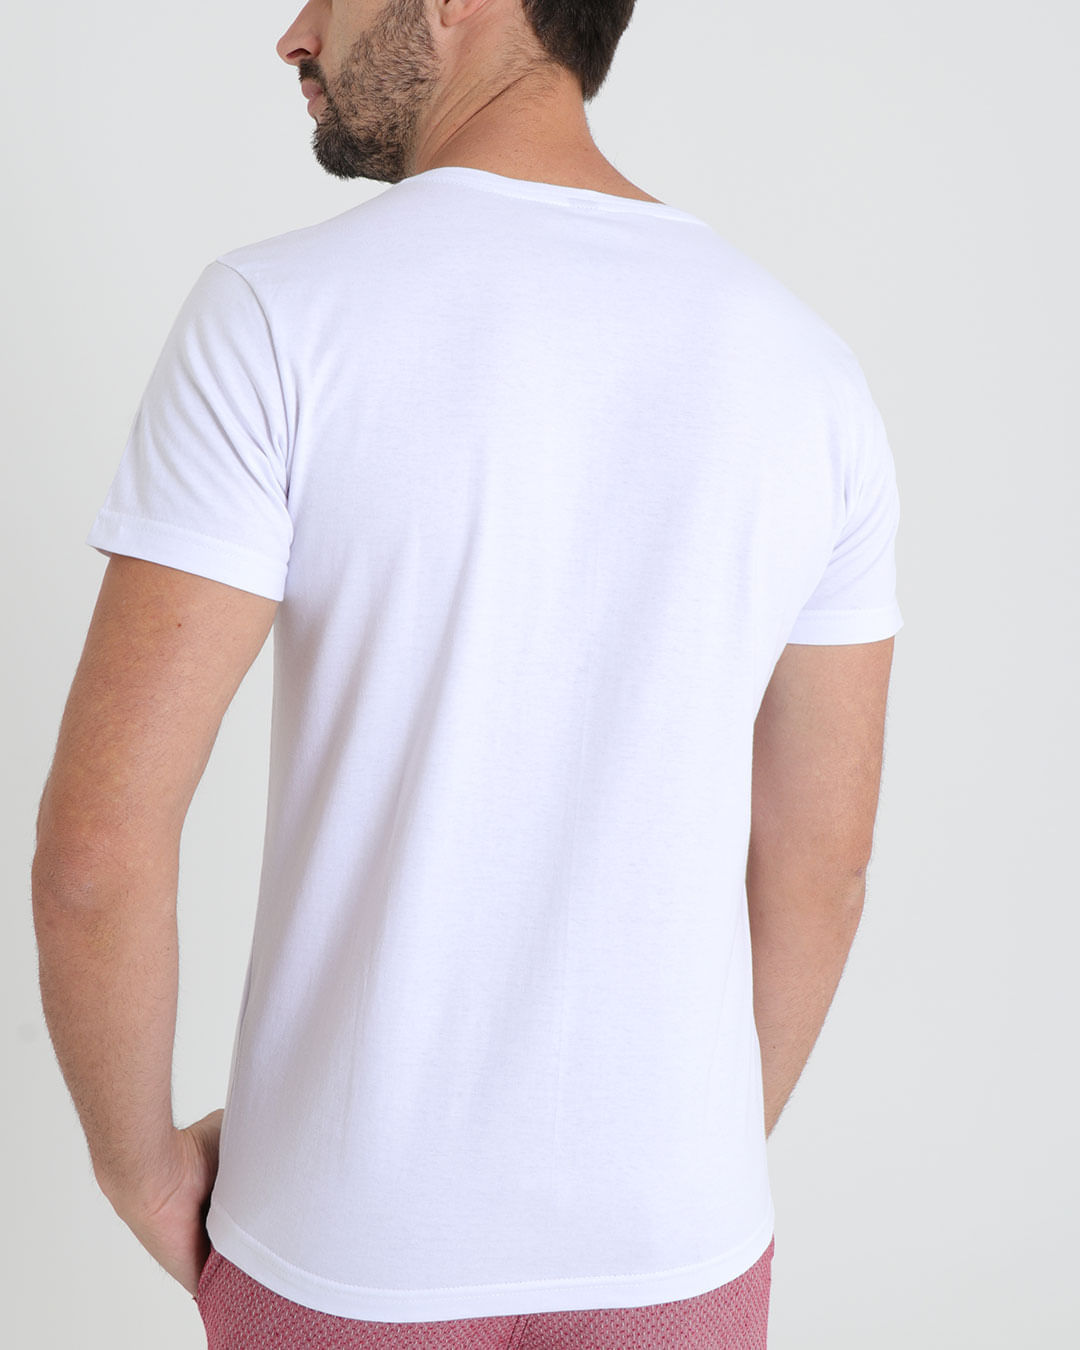 Camiseta-Masculina-Manga-Curta-Estampada-Motorsport-Branca